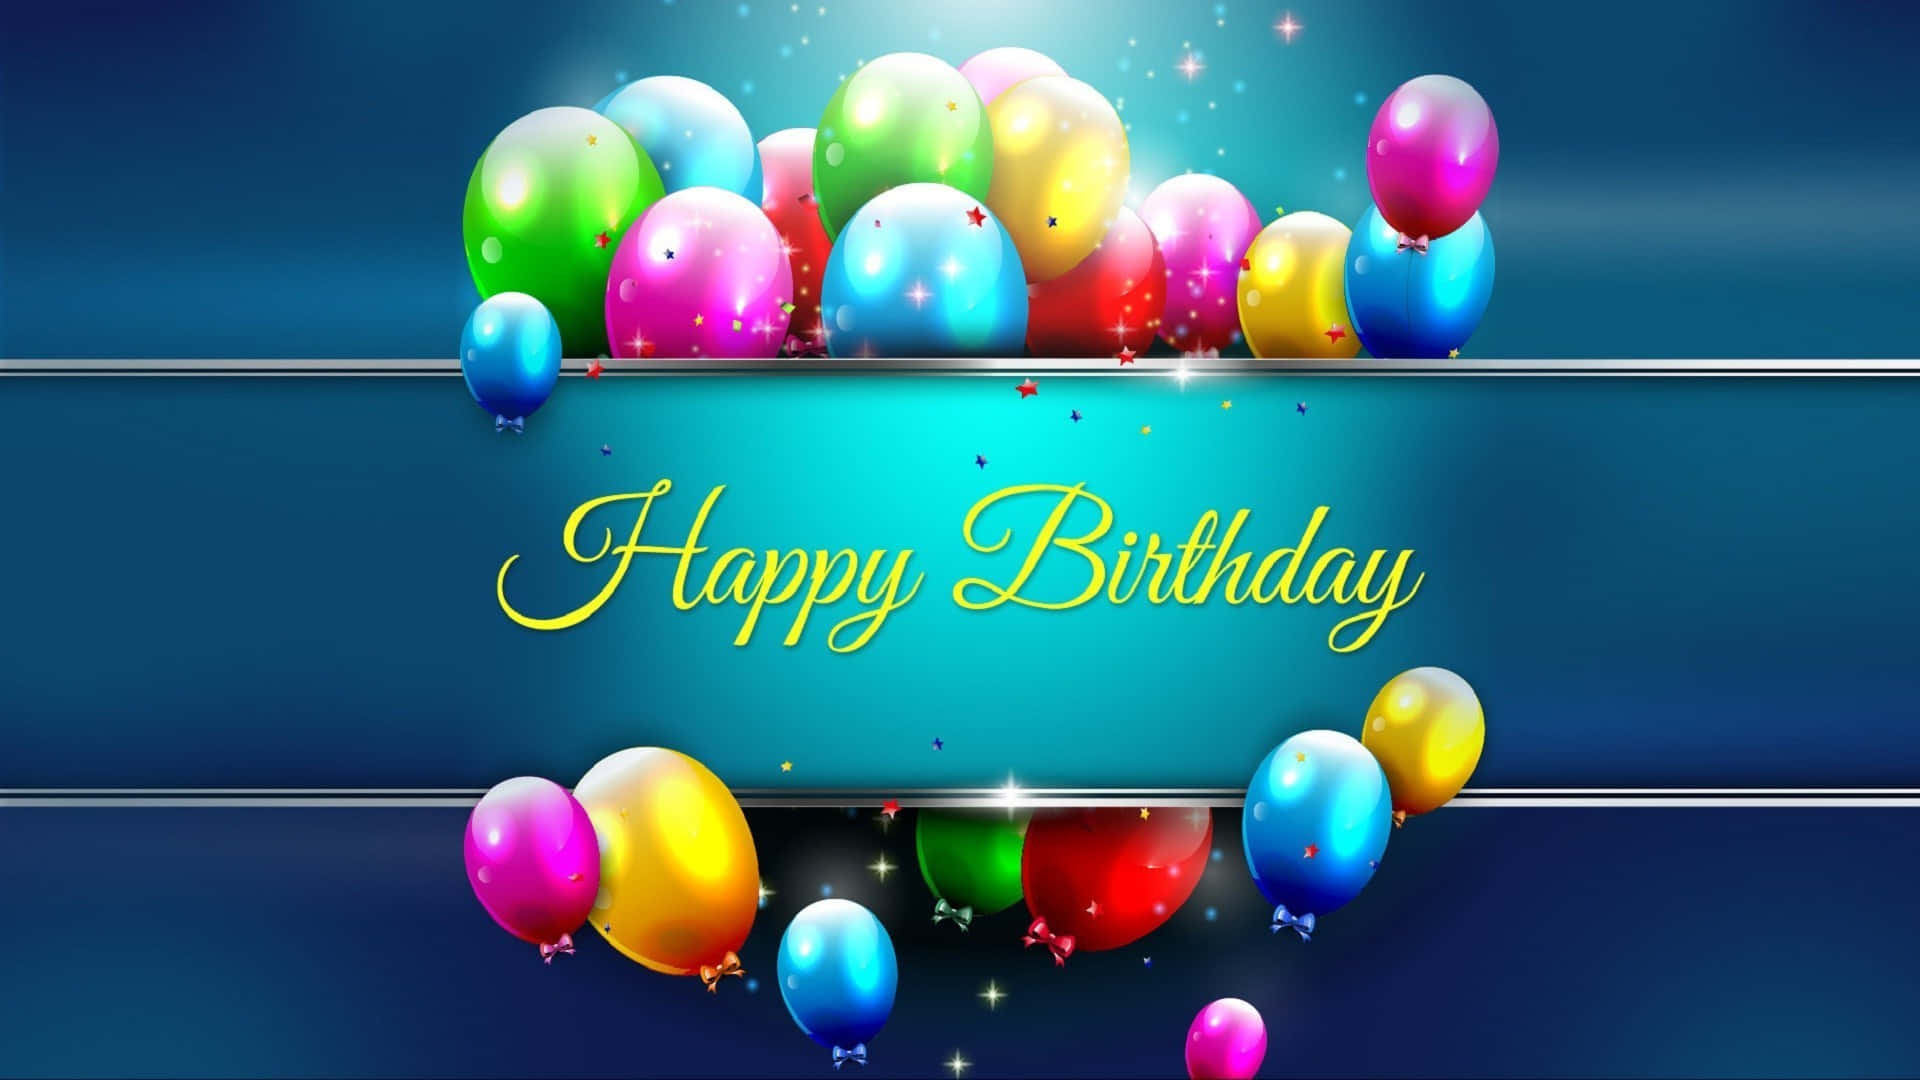 Birthday cupcake over blue background - Stock Image - Everypixel